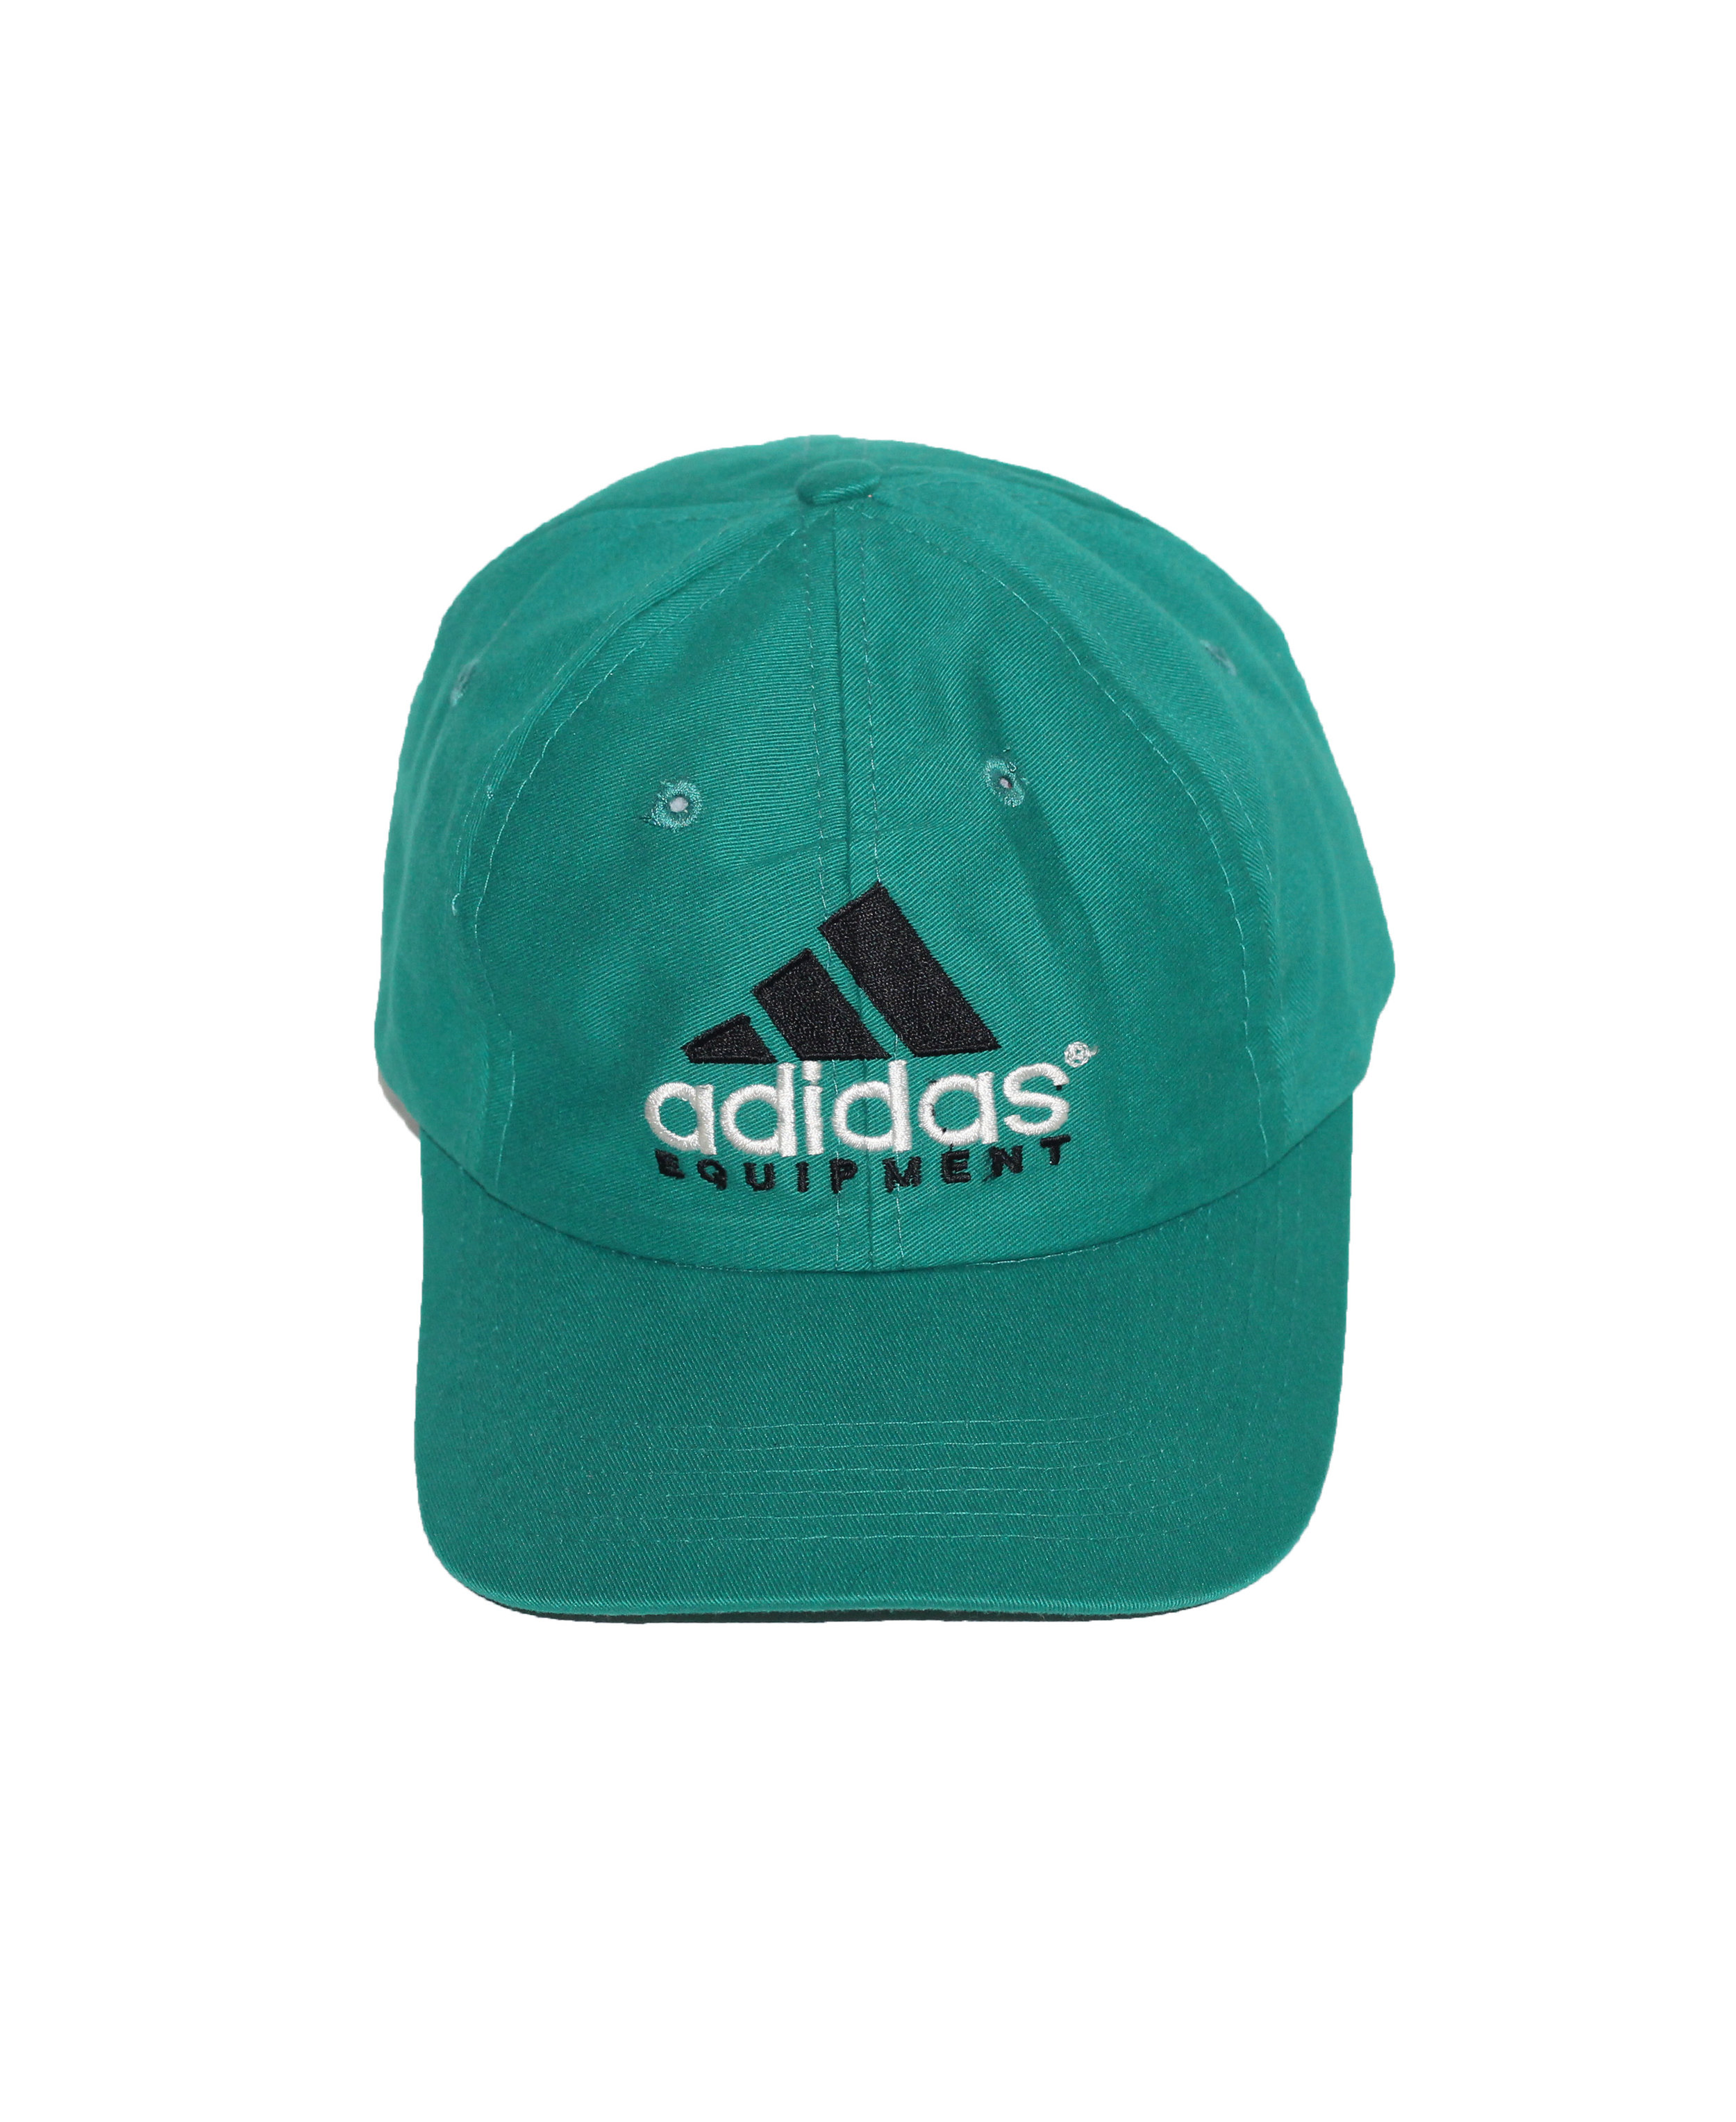 adidas equipment hat